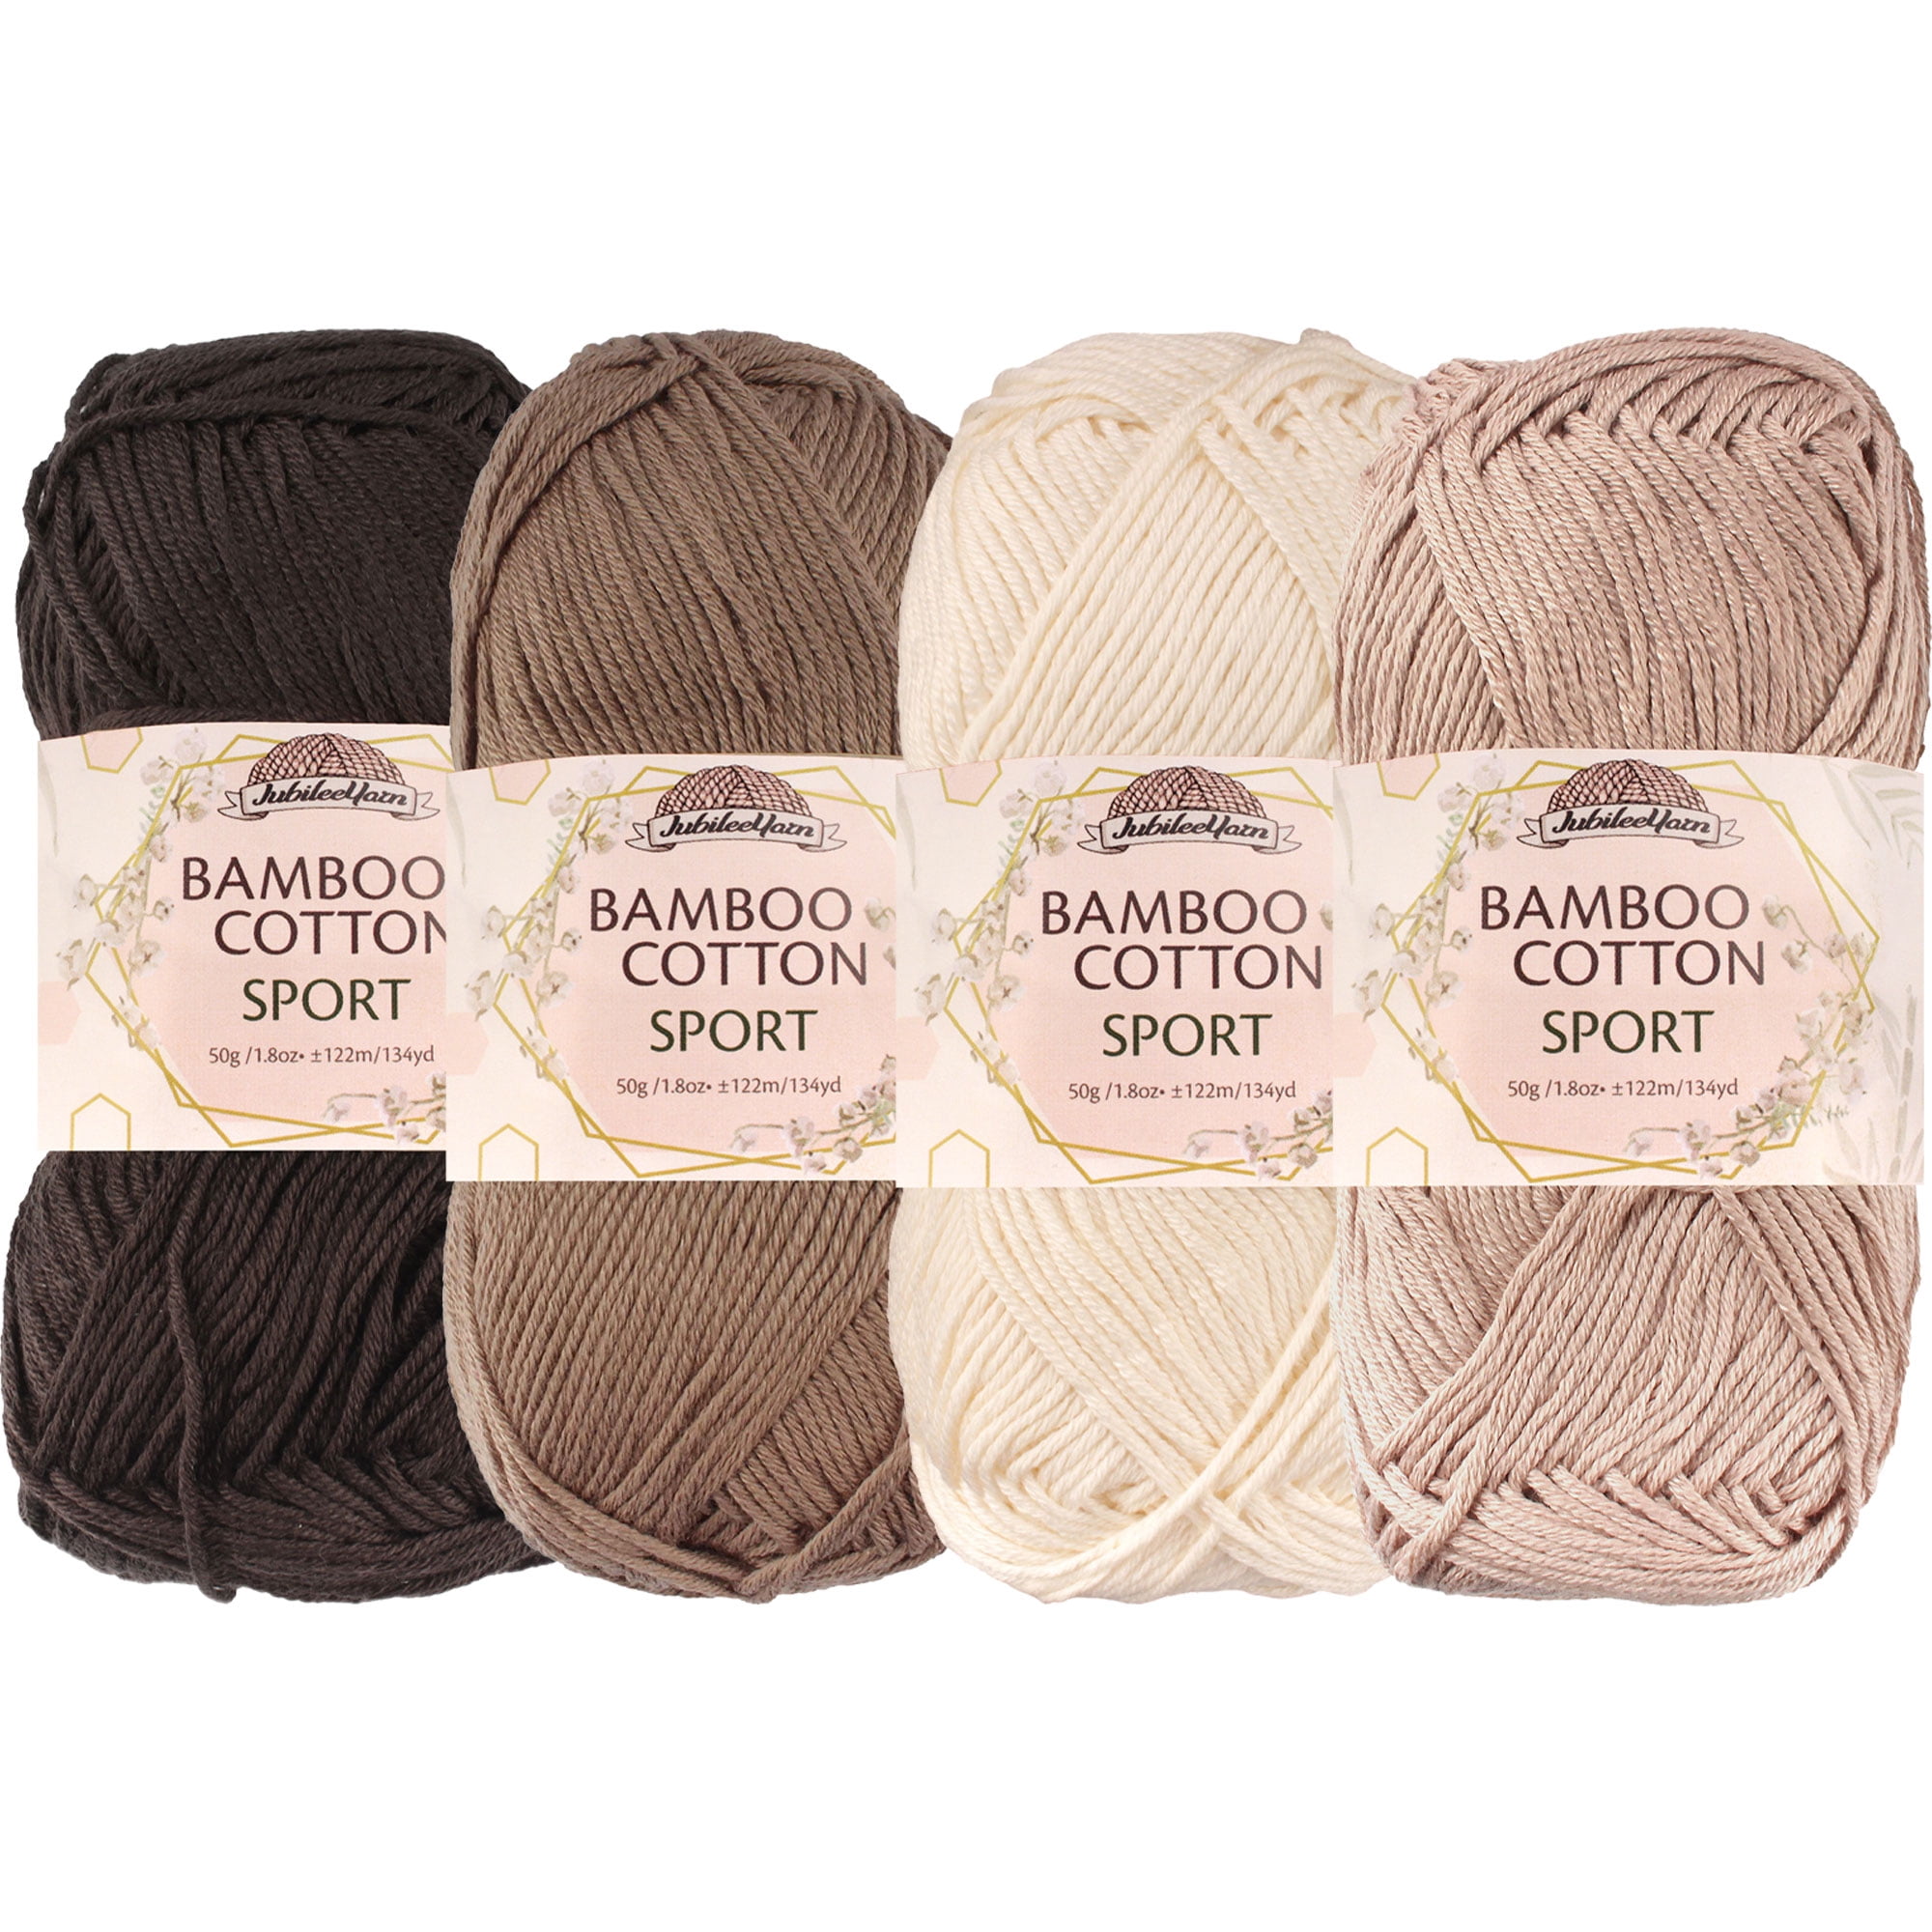 JubileeYarn Bamboo Cotton Sport Yarn - Shades of Brown - 4 Skeins 